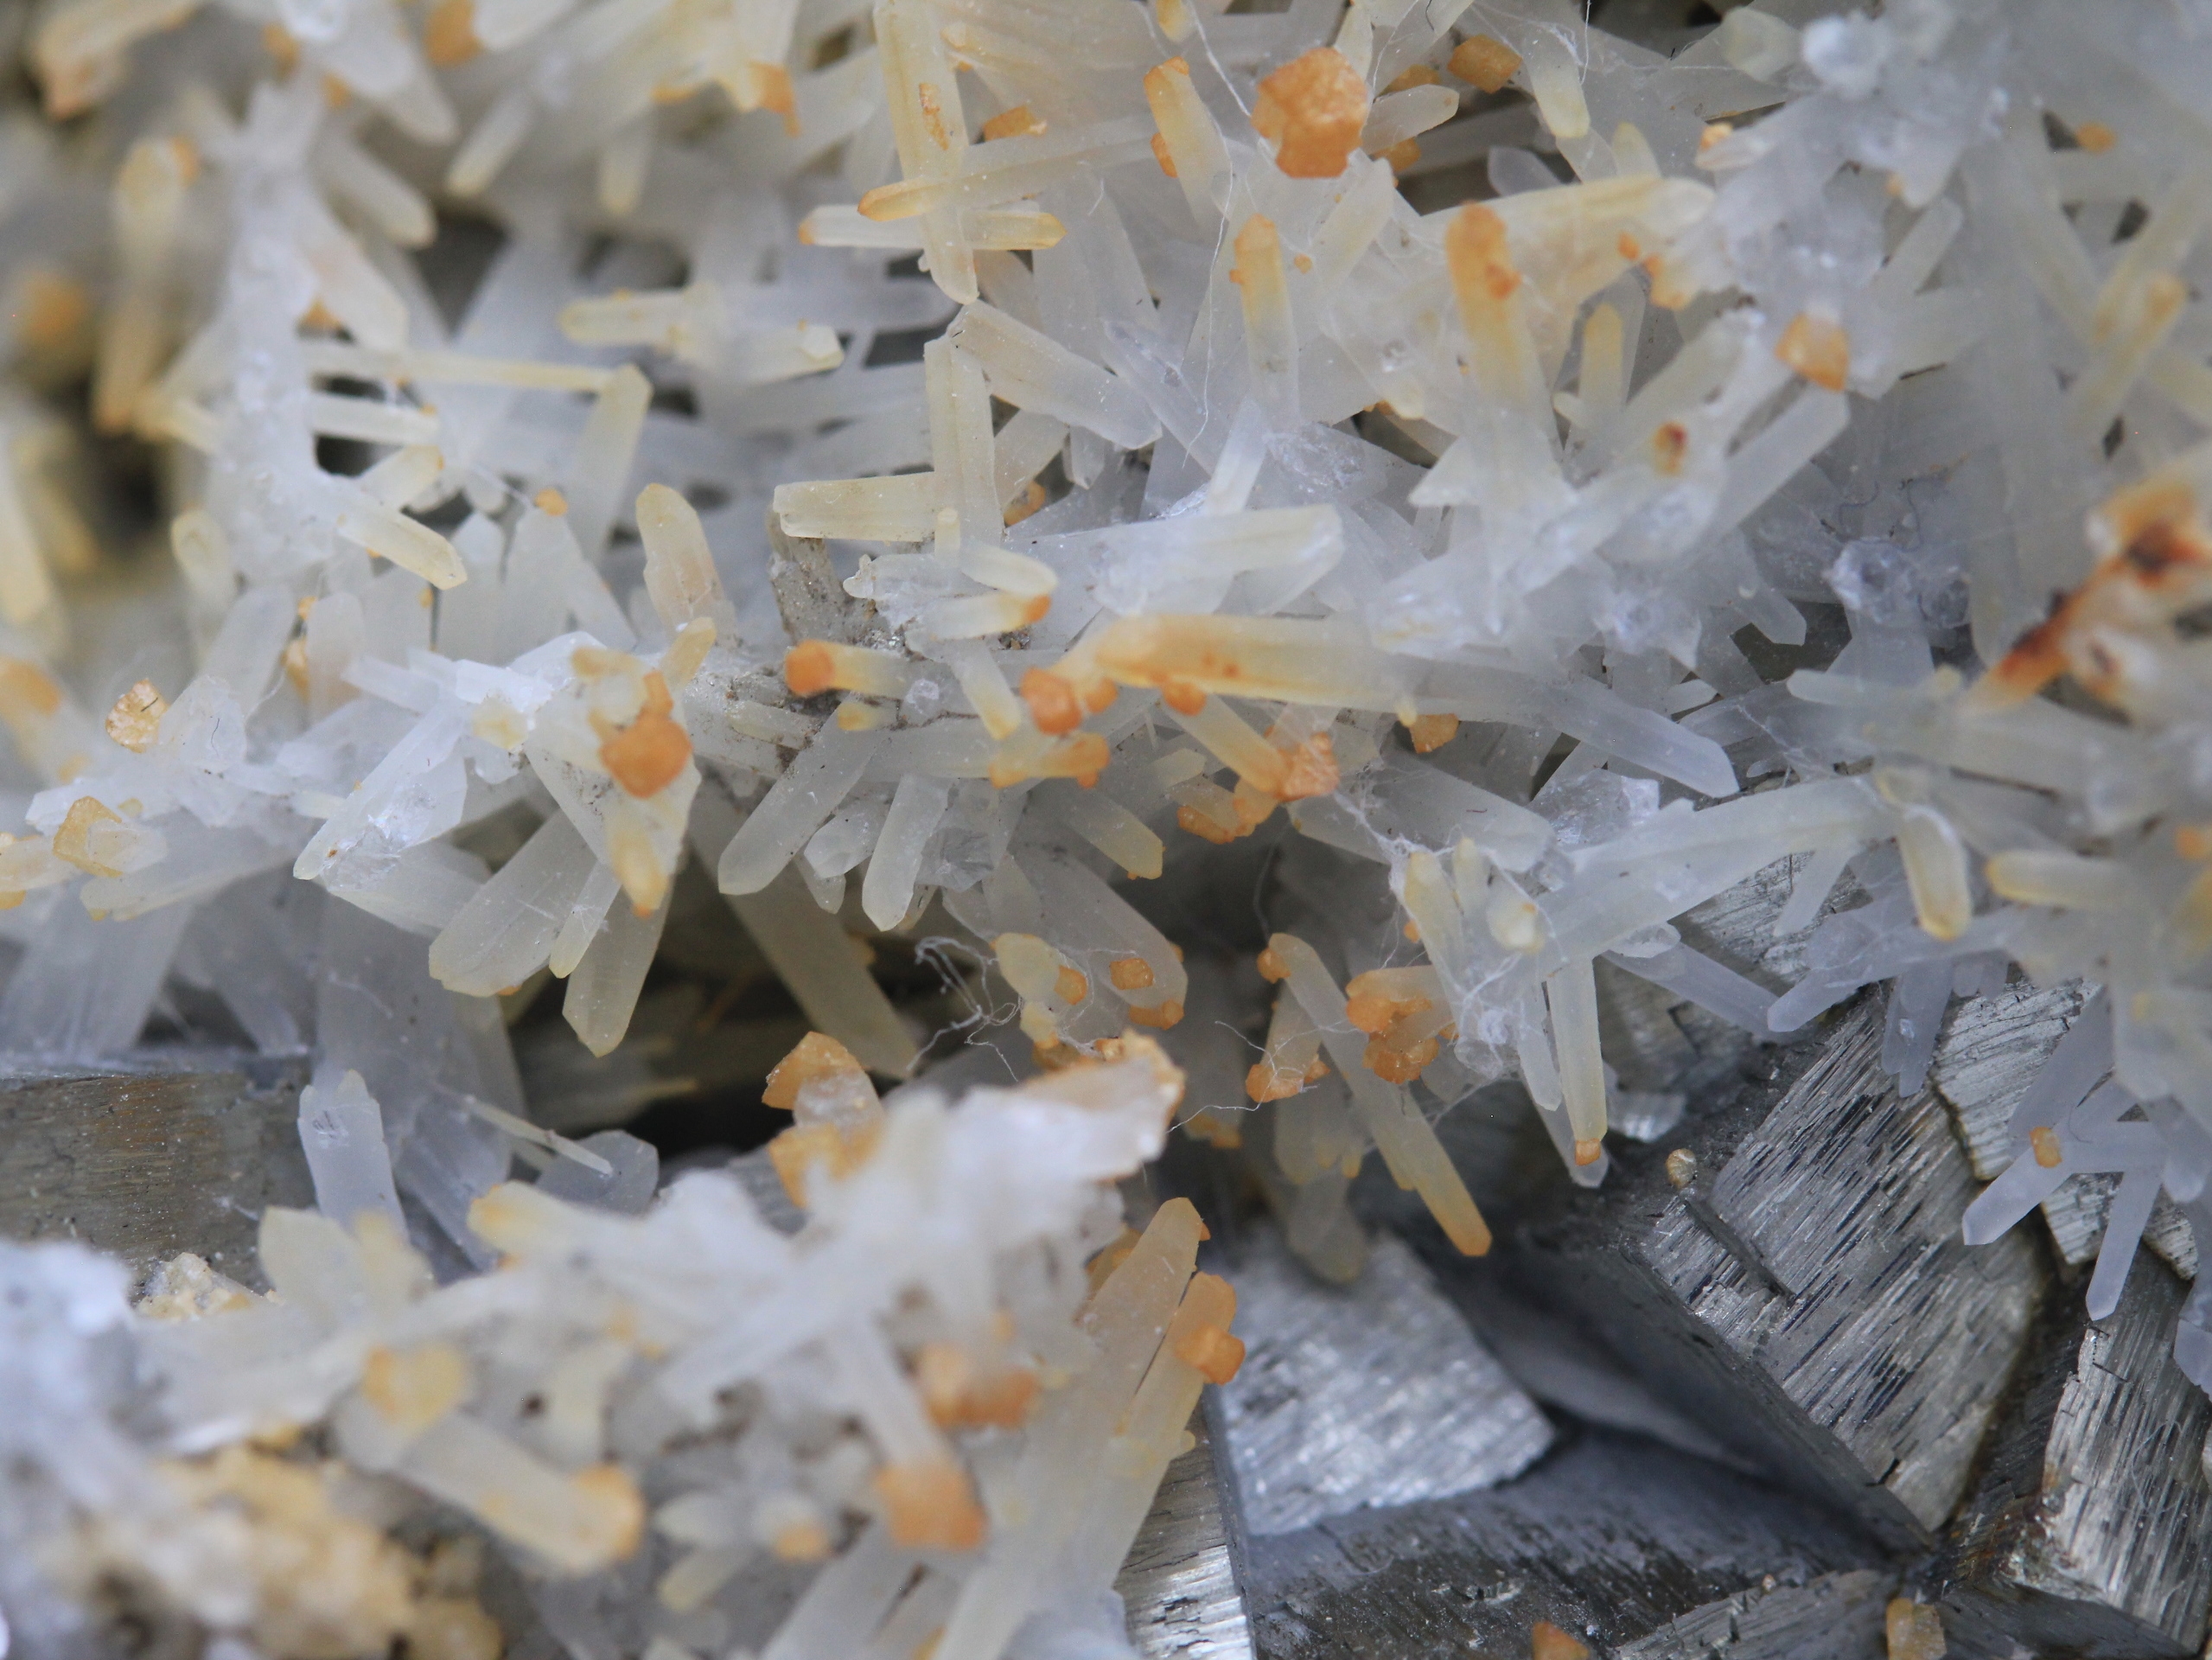 Pyrite with quartz and siderite